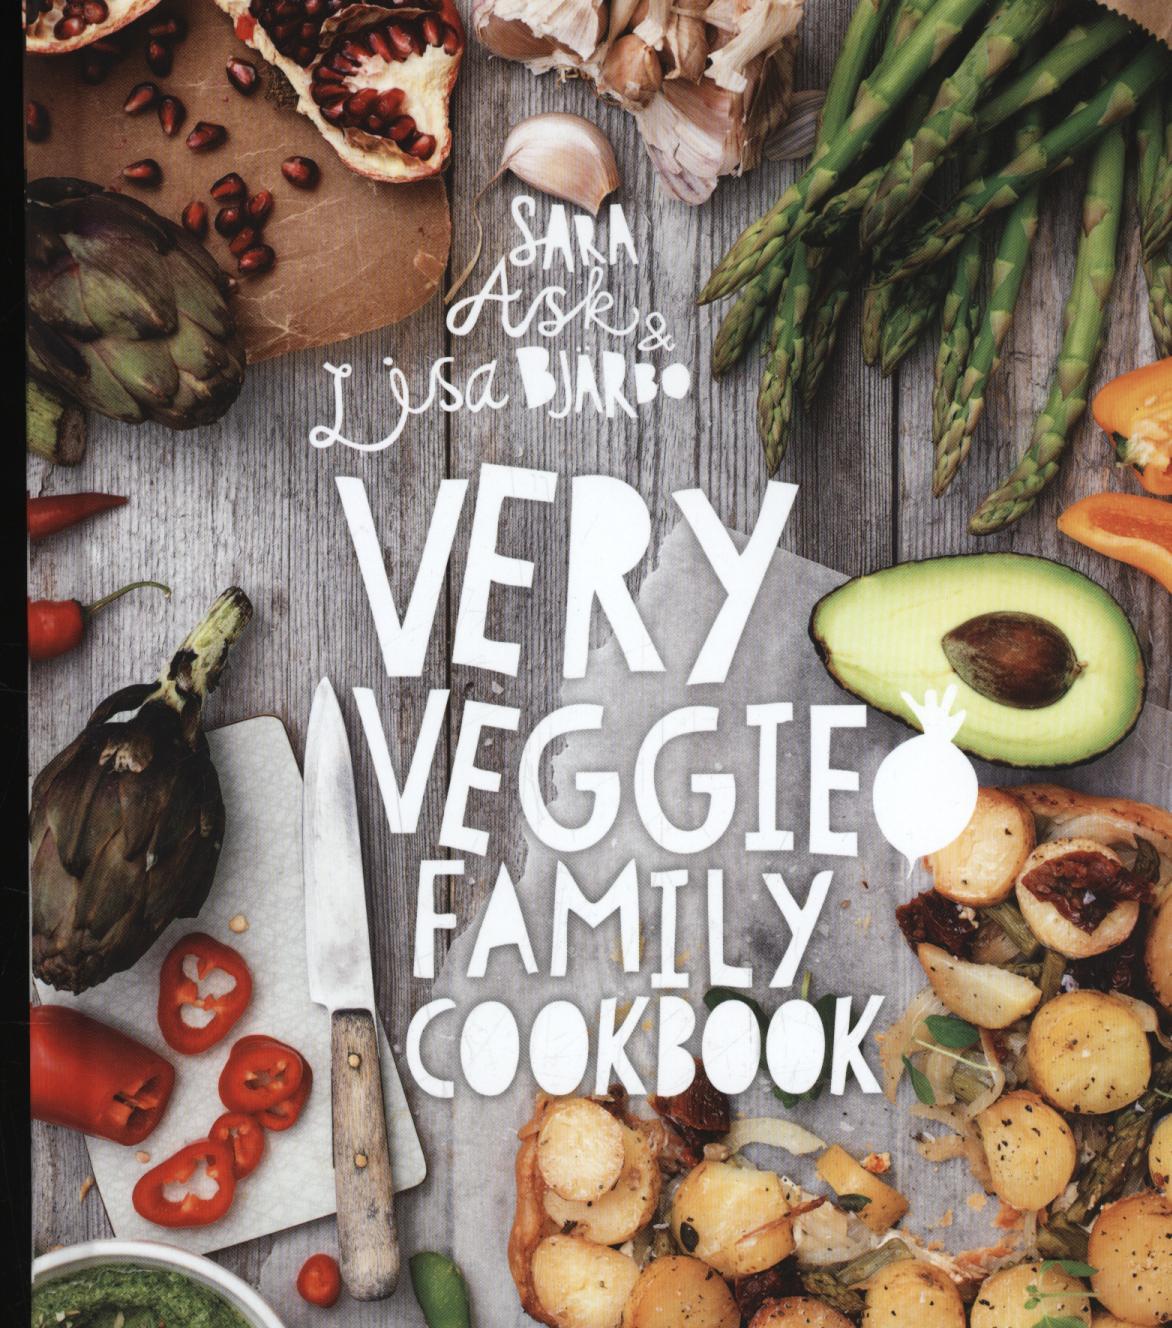 Very Veggie Family Cookbook